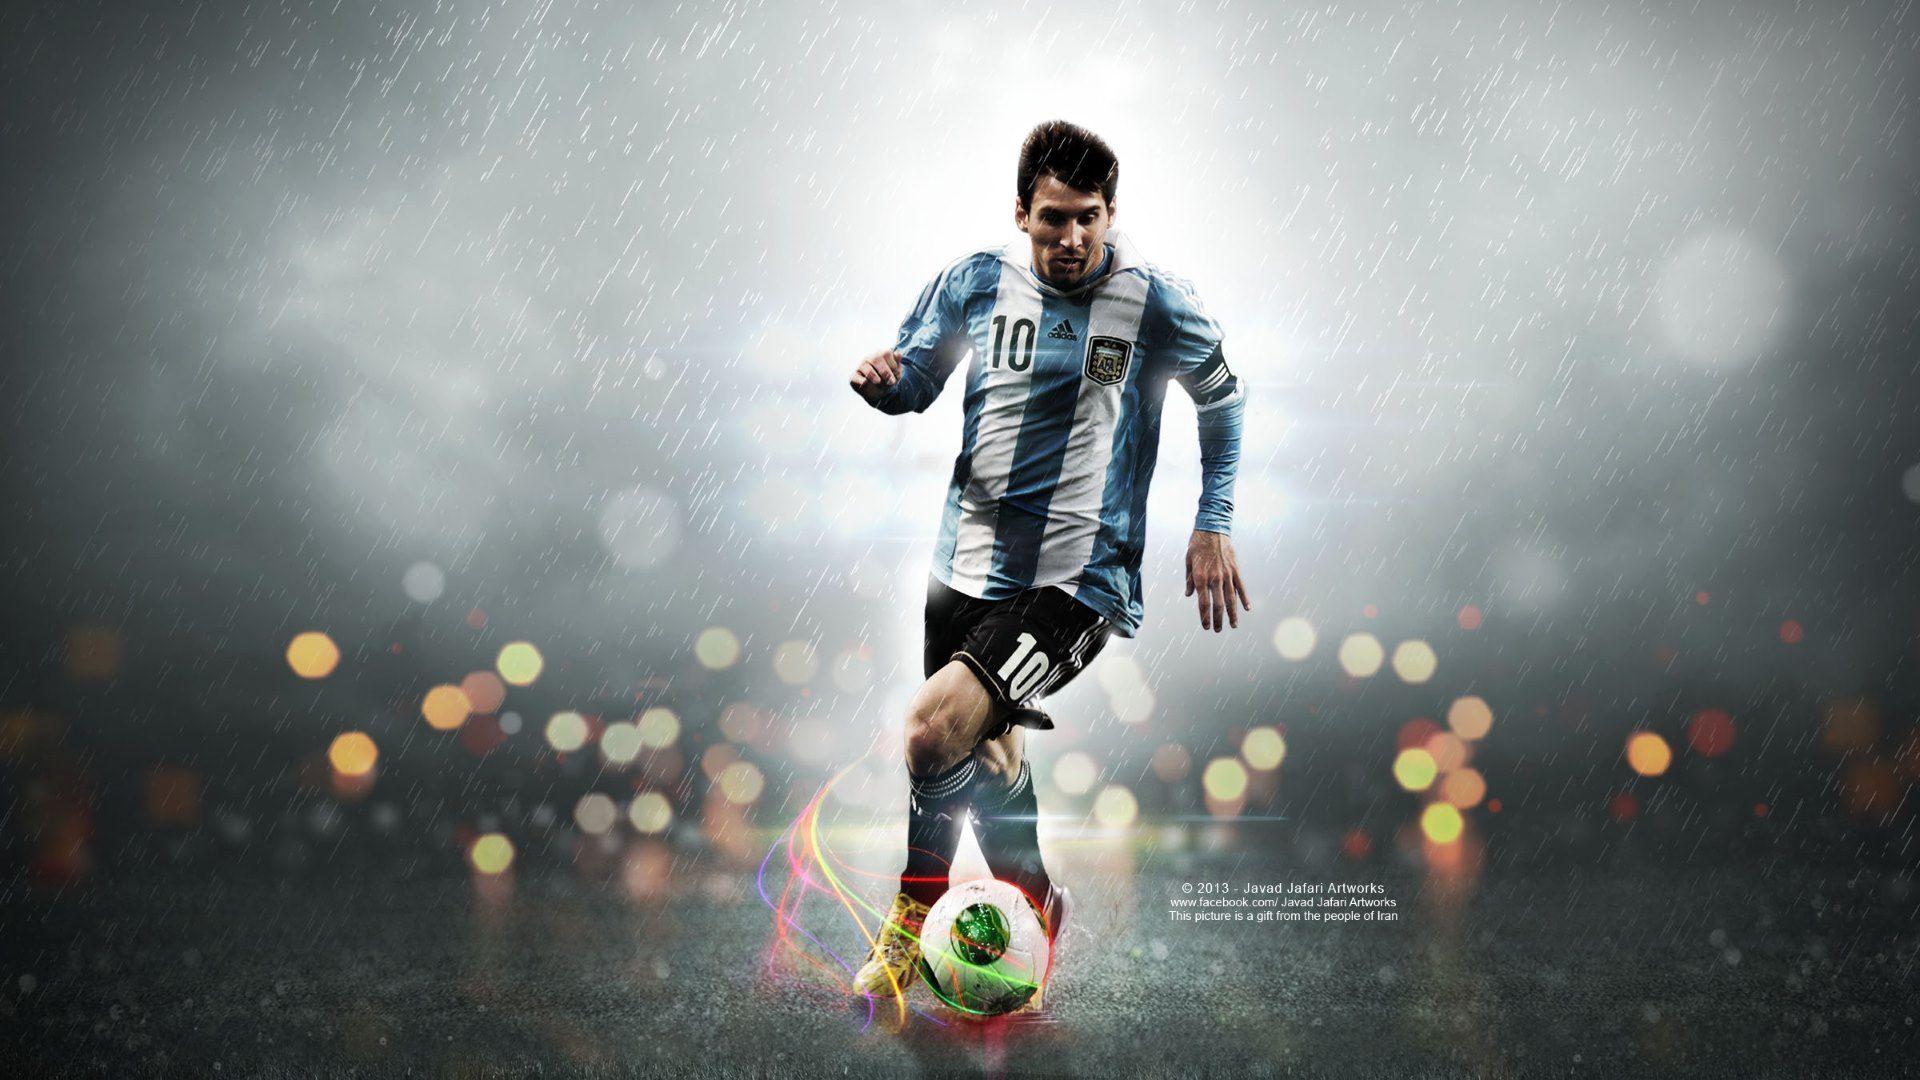 HD Wallpaper Messi. #LeoMessi. Lionel messi wallpaper